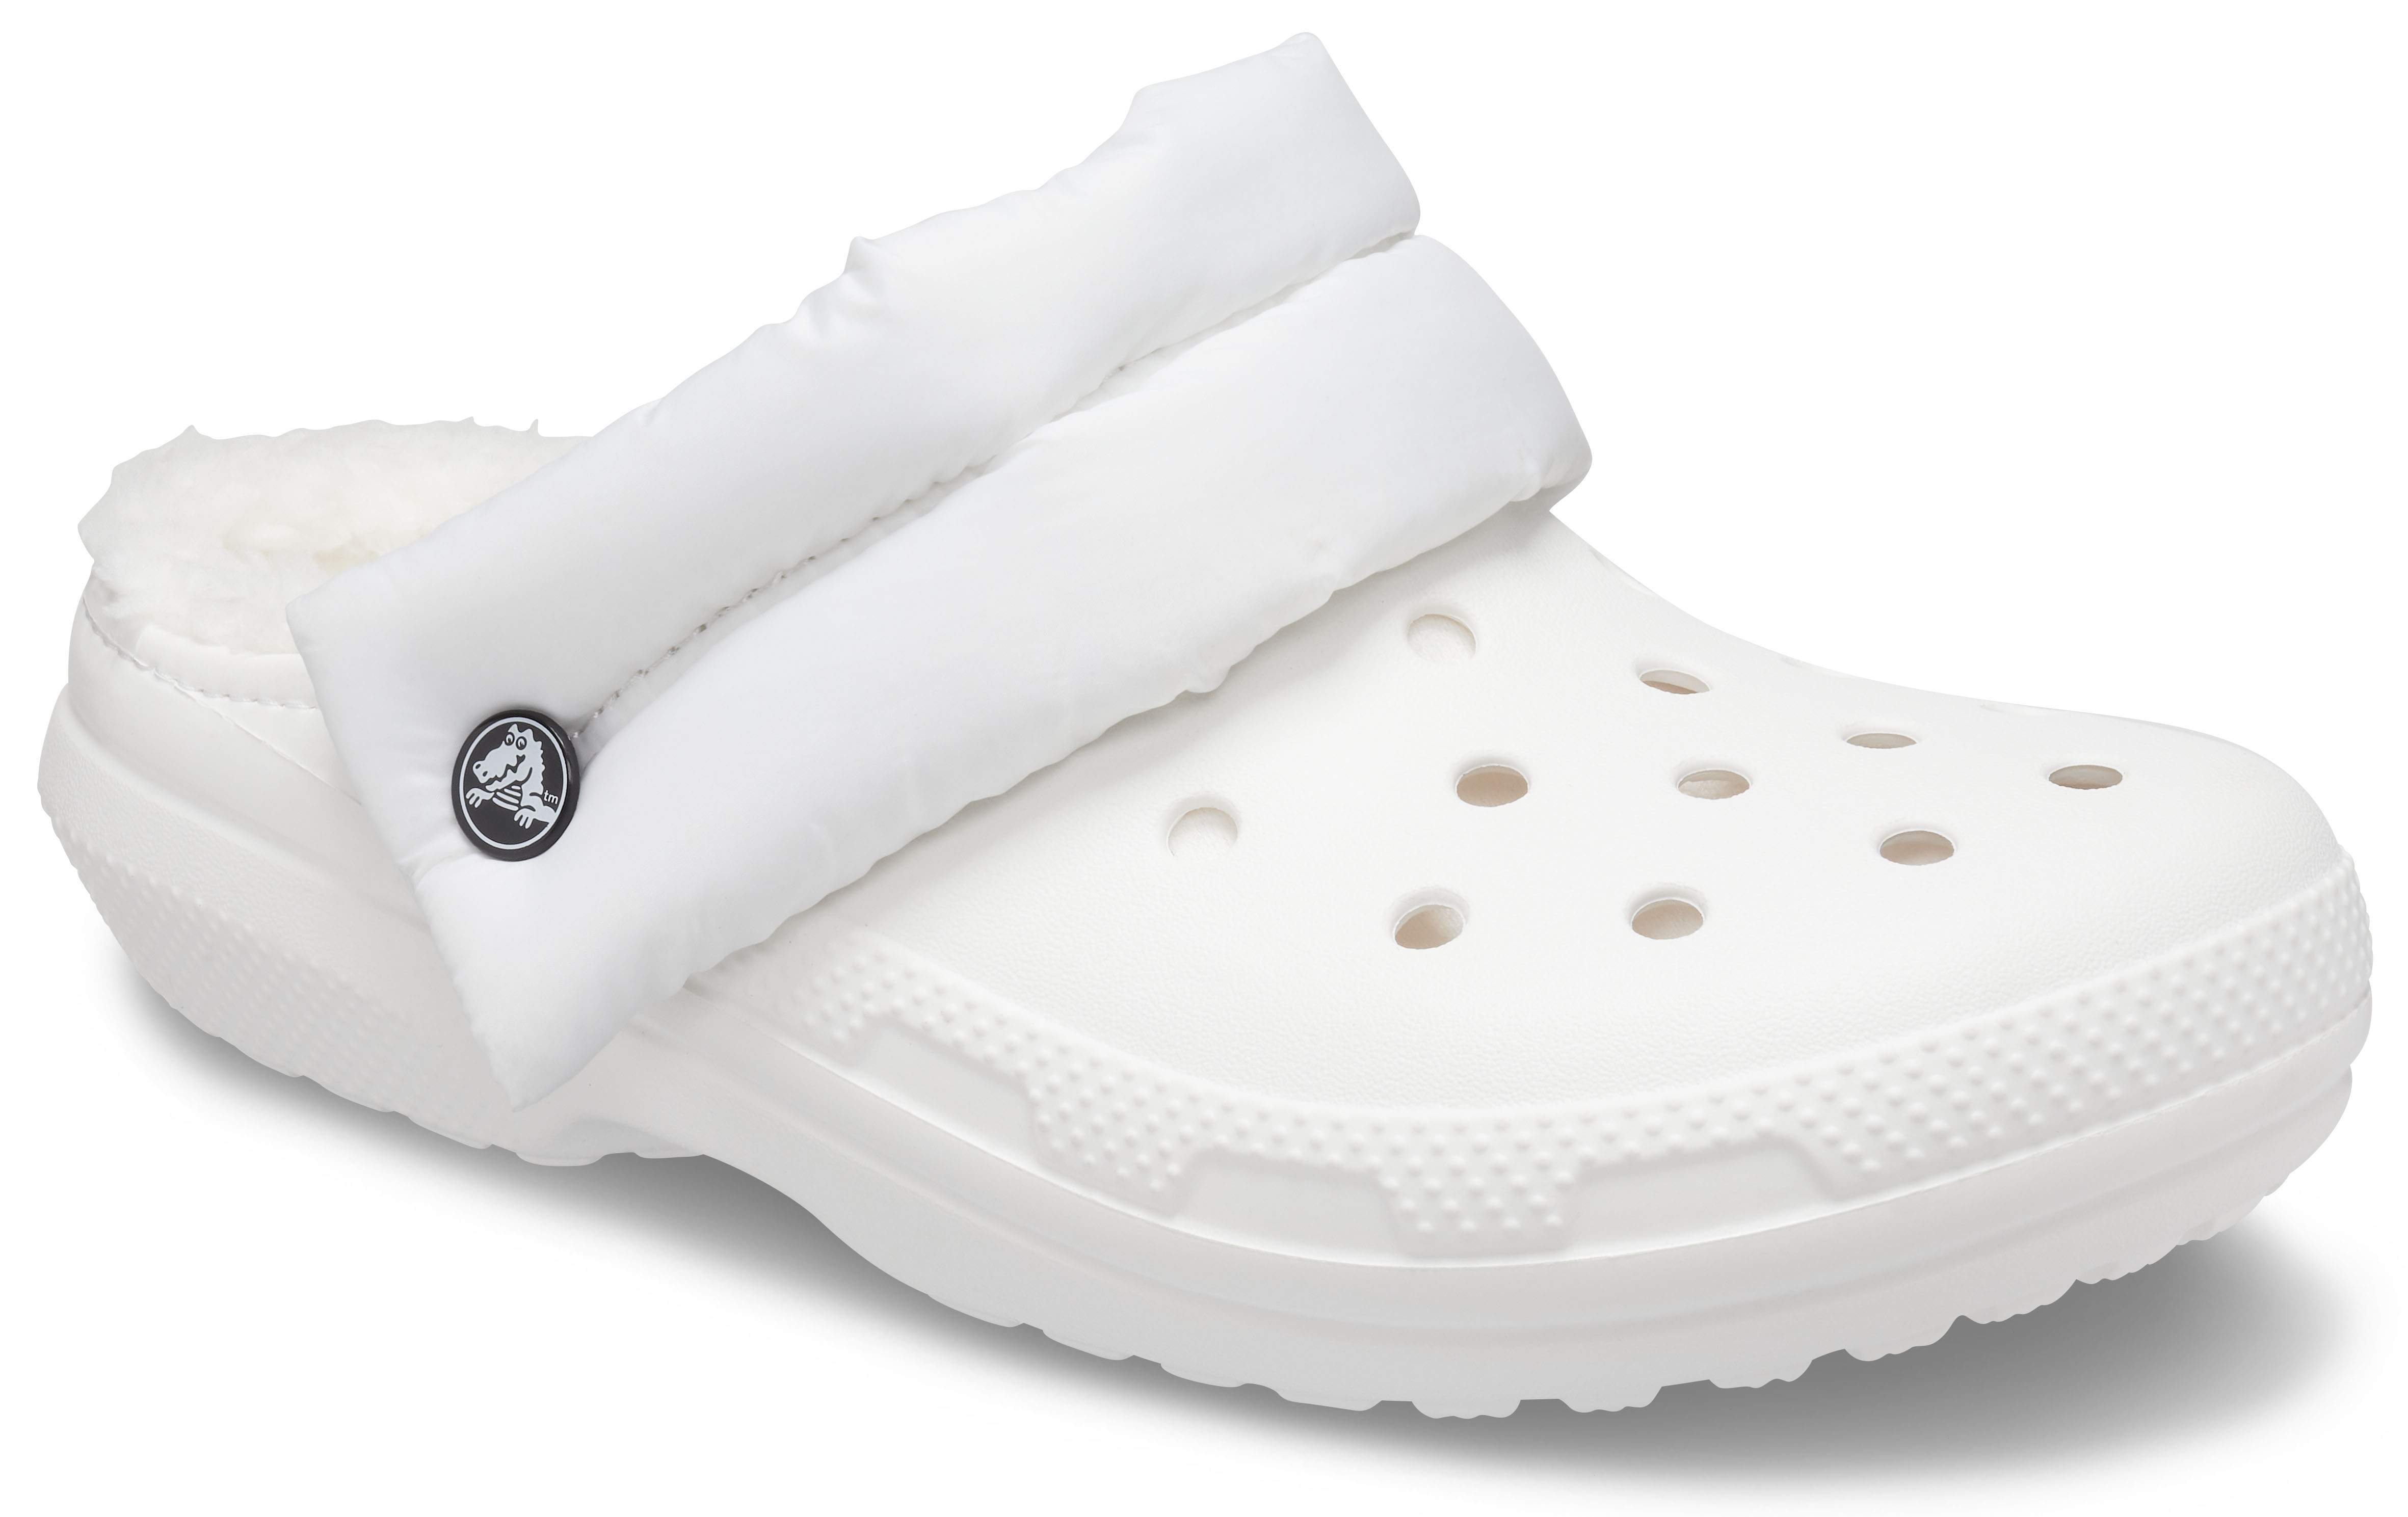 white classic fuzz lined crocs